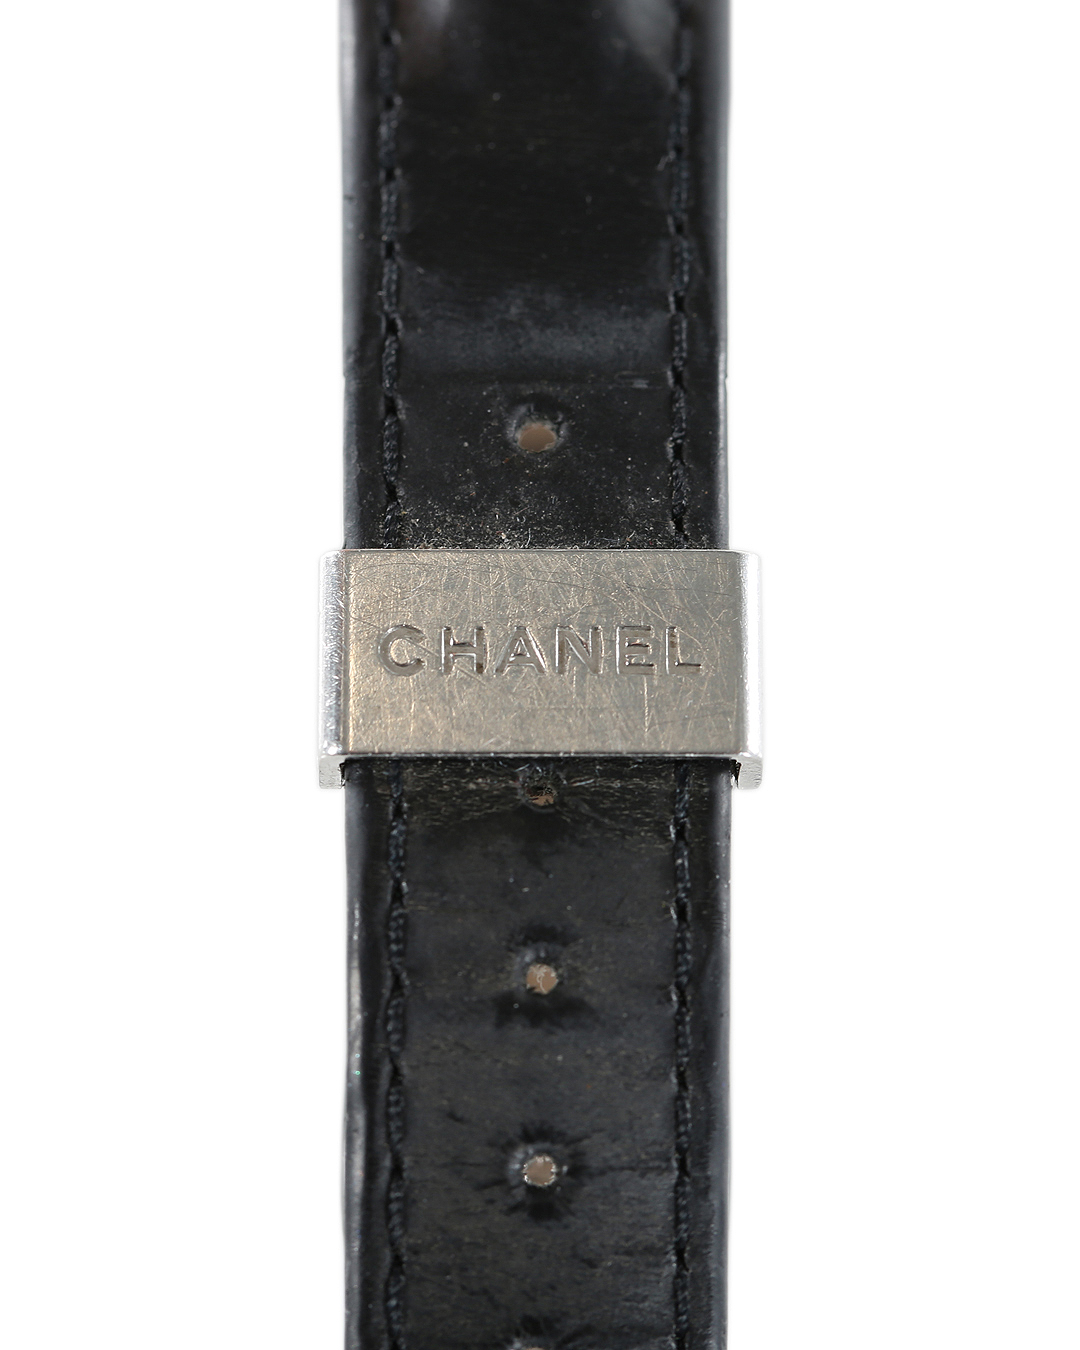 Chanel Black Ceramic J12 H0682 Quartz Women's Wristwatch 33 Mm